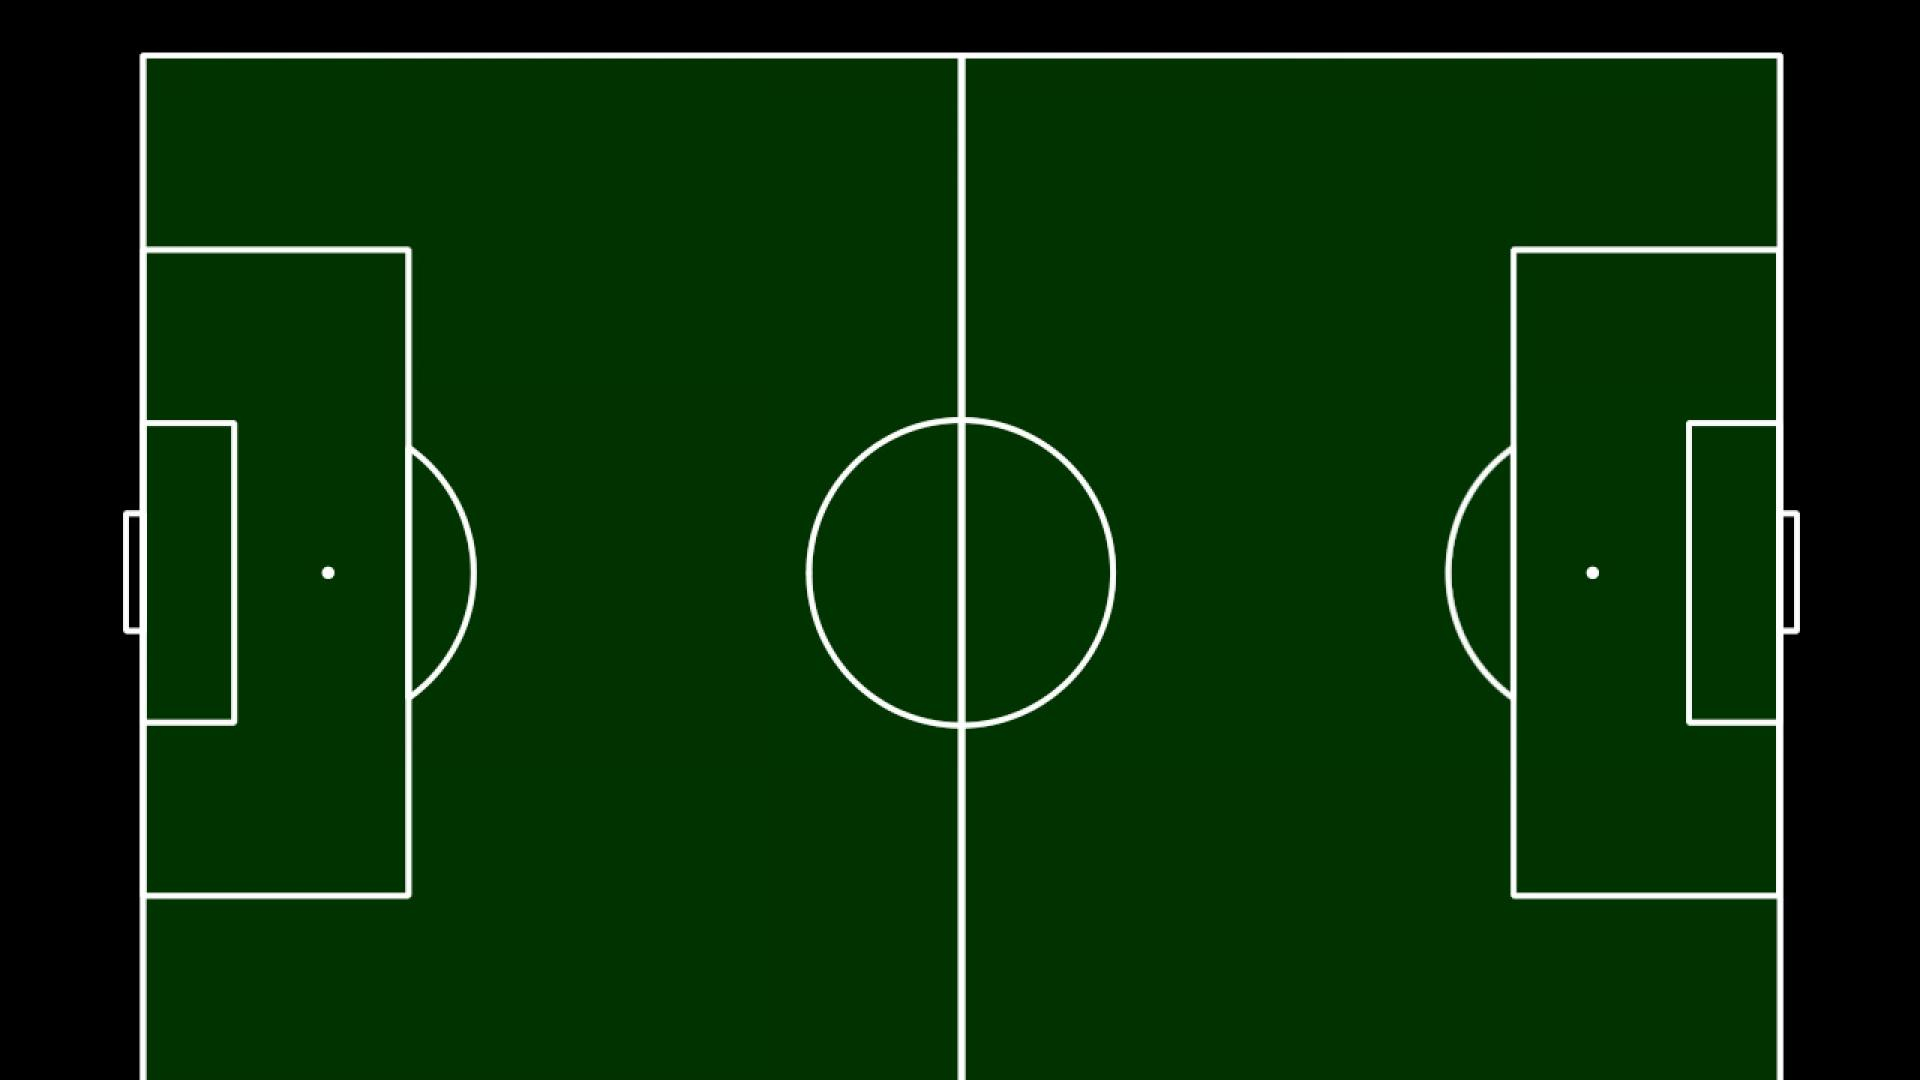 Soccer Field Diagram Free Soccer Field Diagram Download Free Clip Art Free Clip Art On